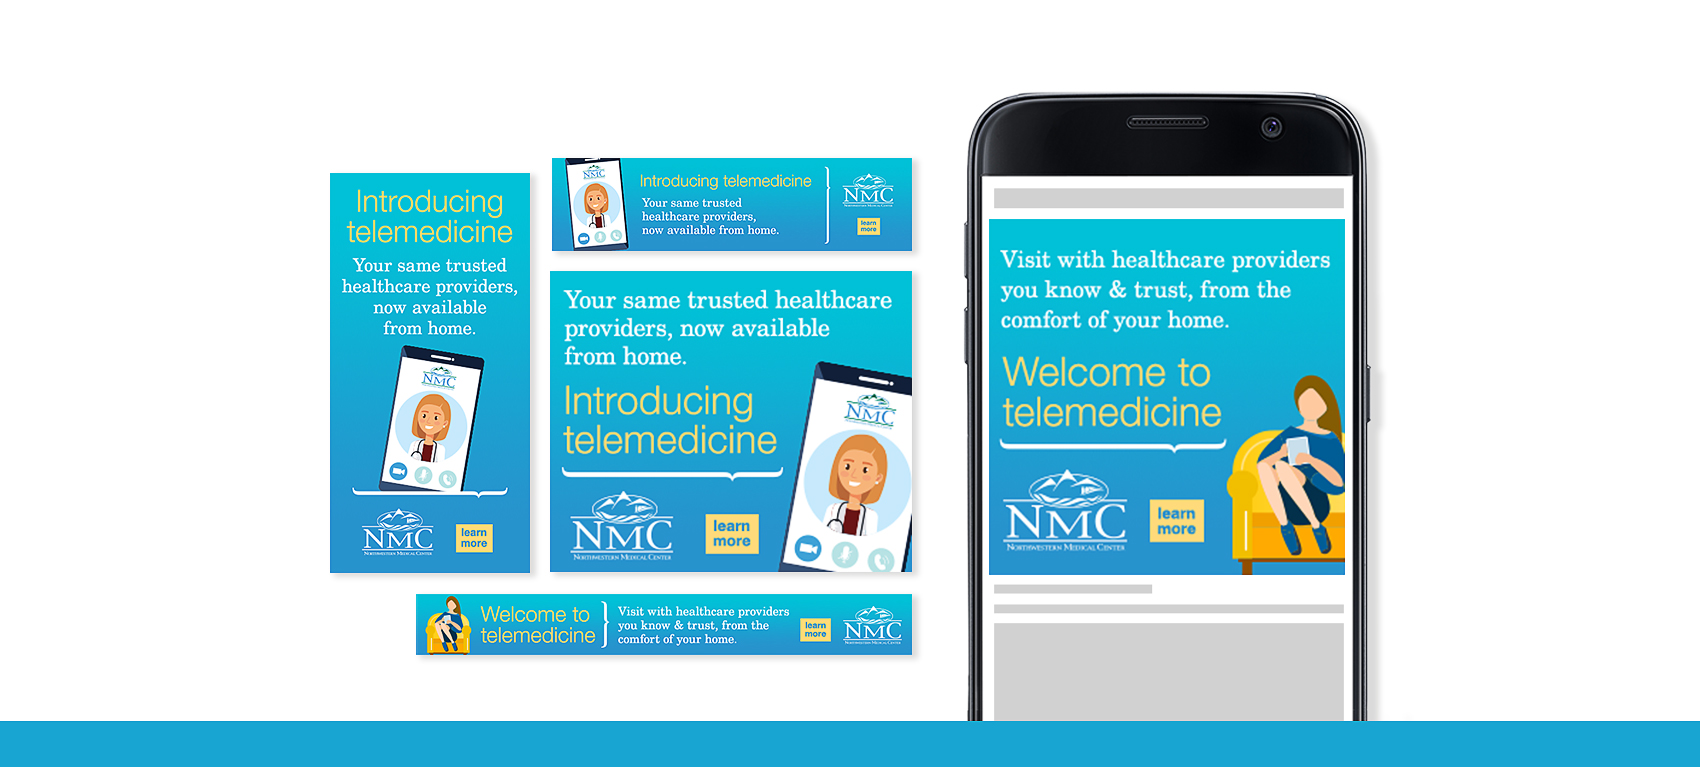 Digital advertising design for healthcare marketing campaign